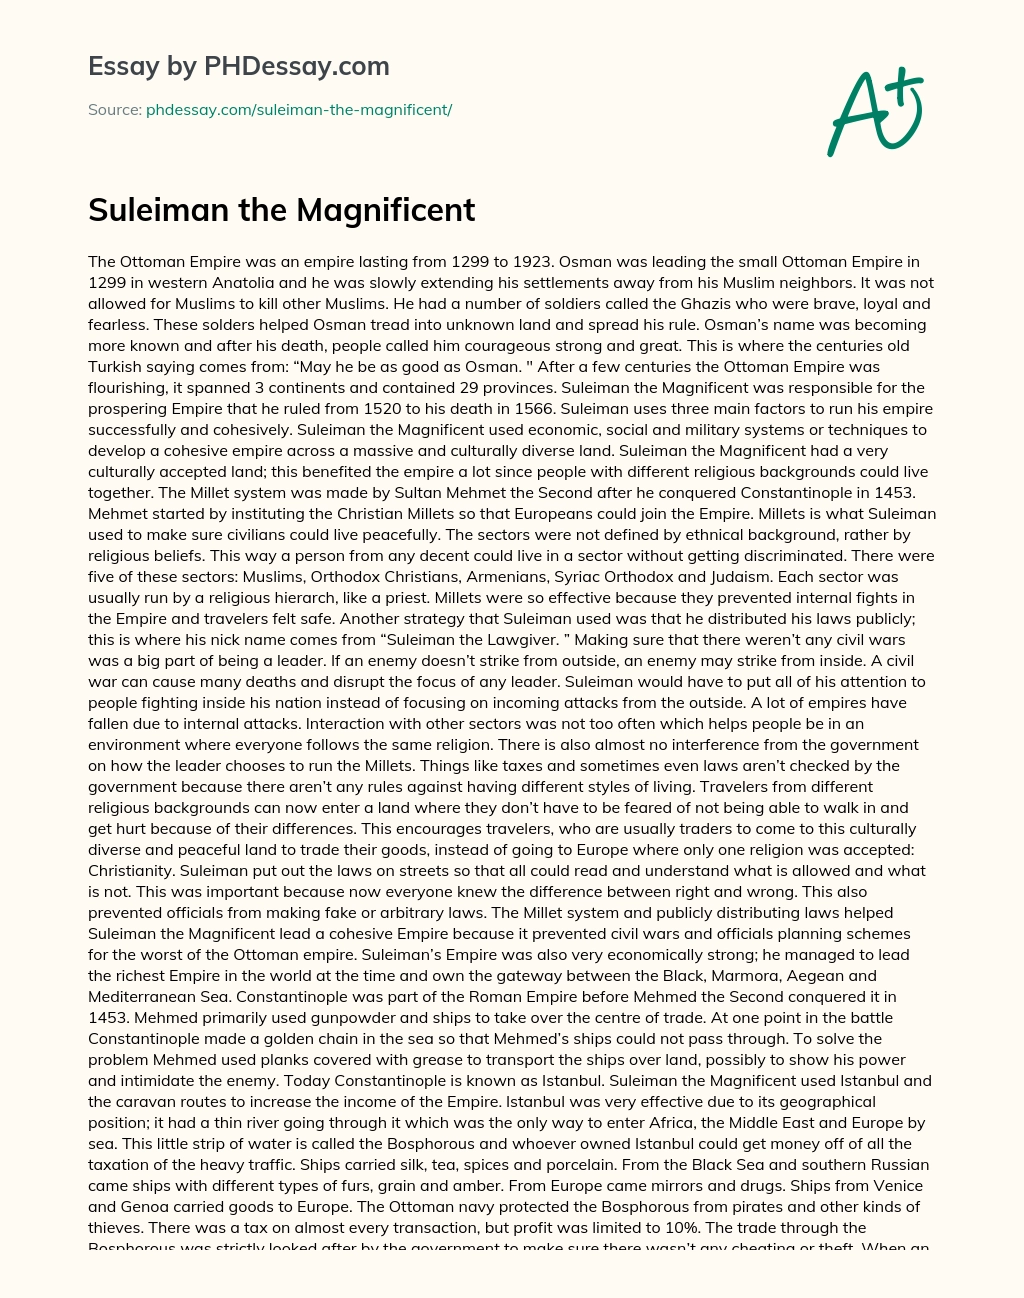 Suleiman the Magnificent essay